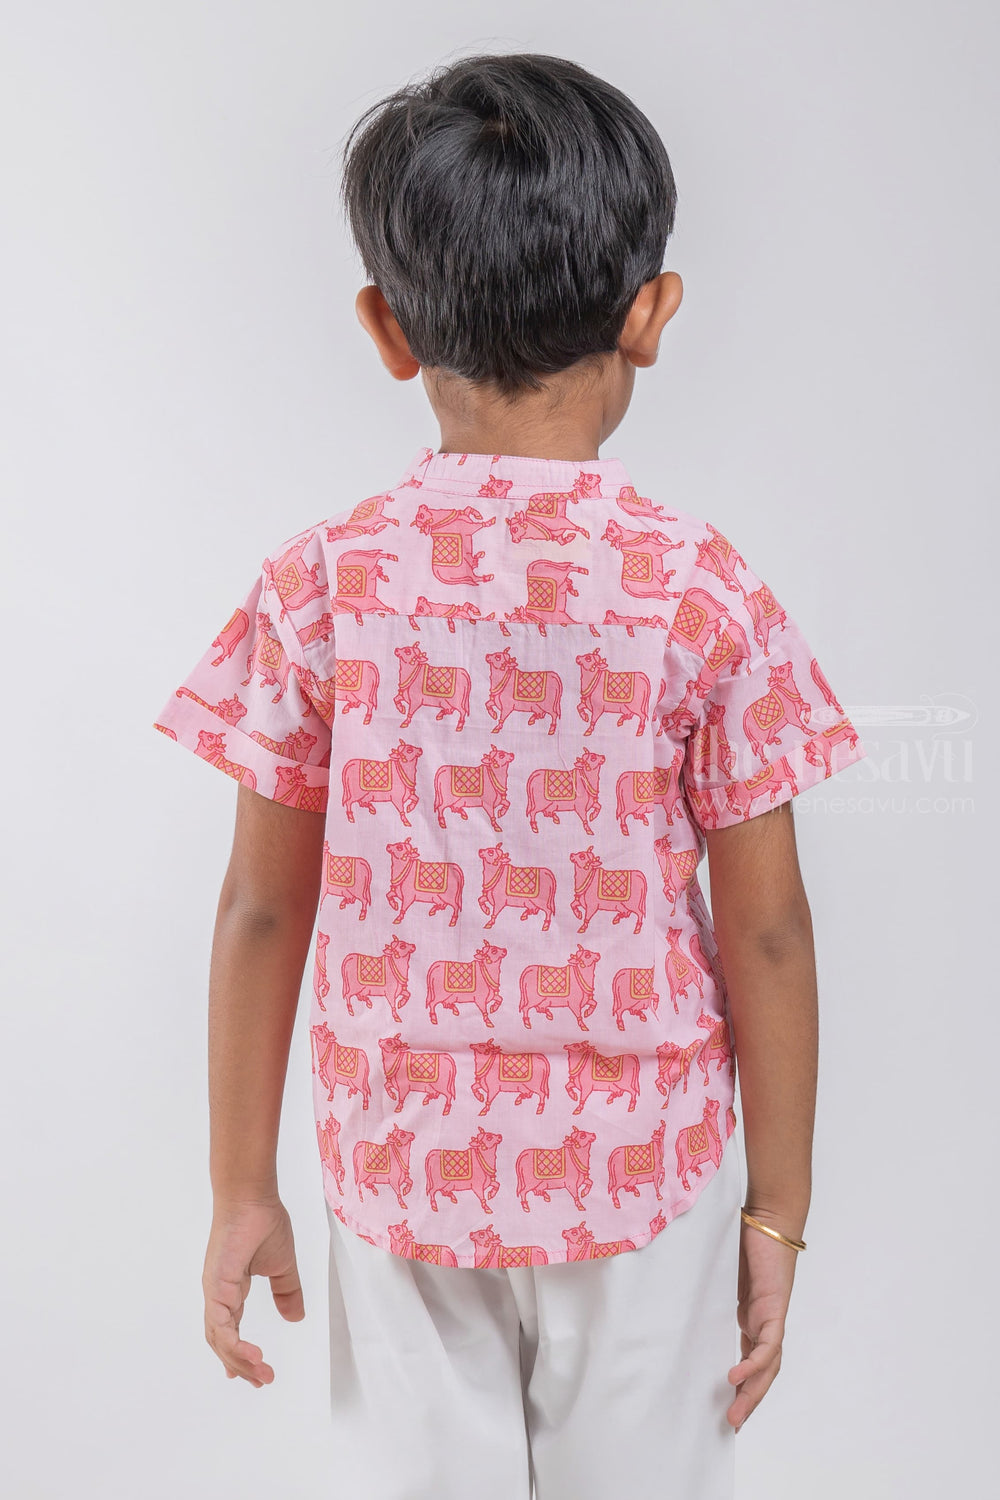 The Nesavu Boys Cotton Shirt Elegant Boys' Shirt with Pichwai Cow Print | Cotton | Nesavu | Symbolize Prosperity and Serenity psr silks Nesavu